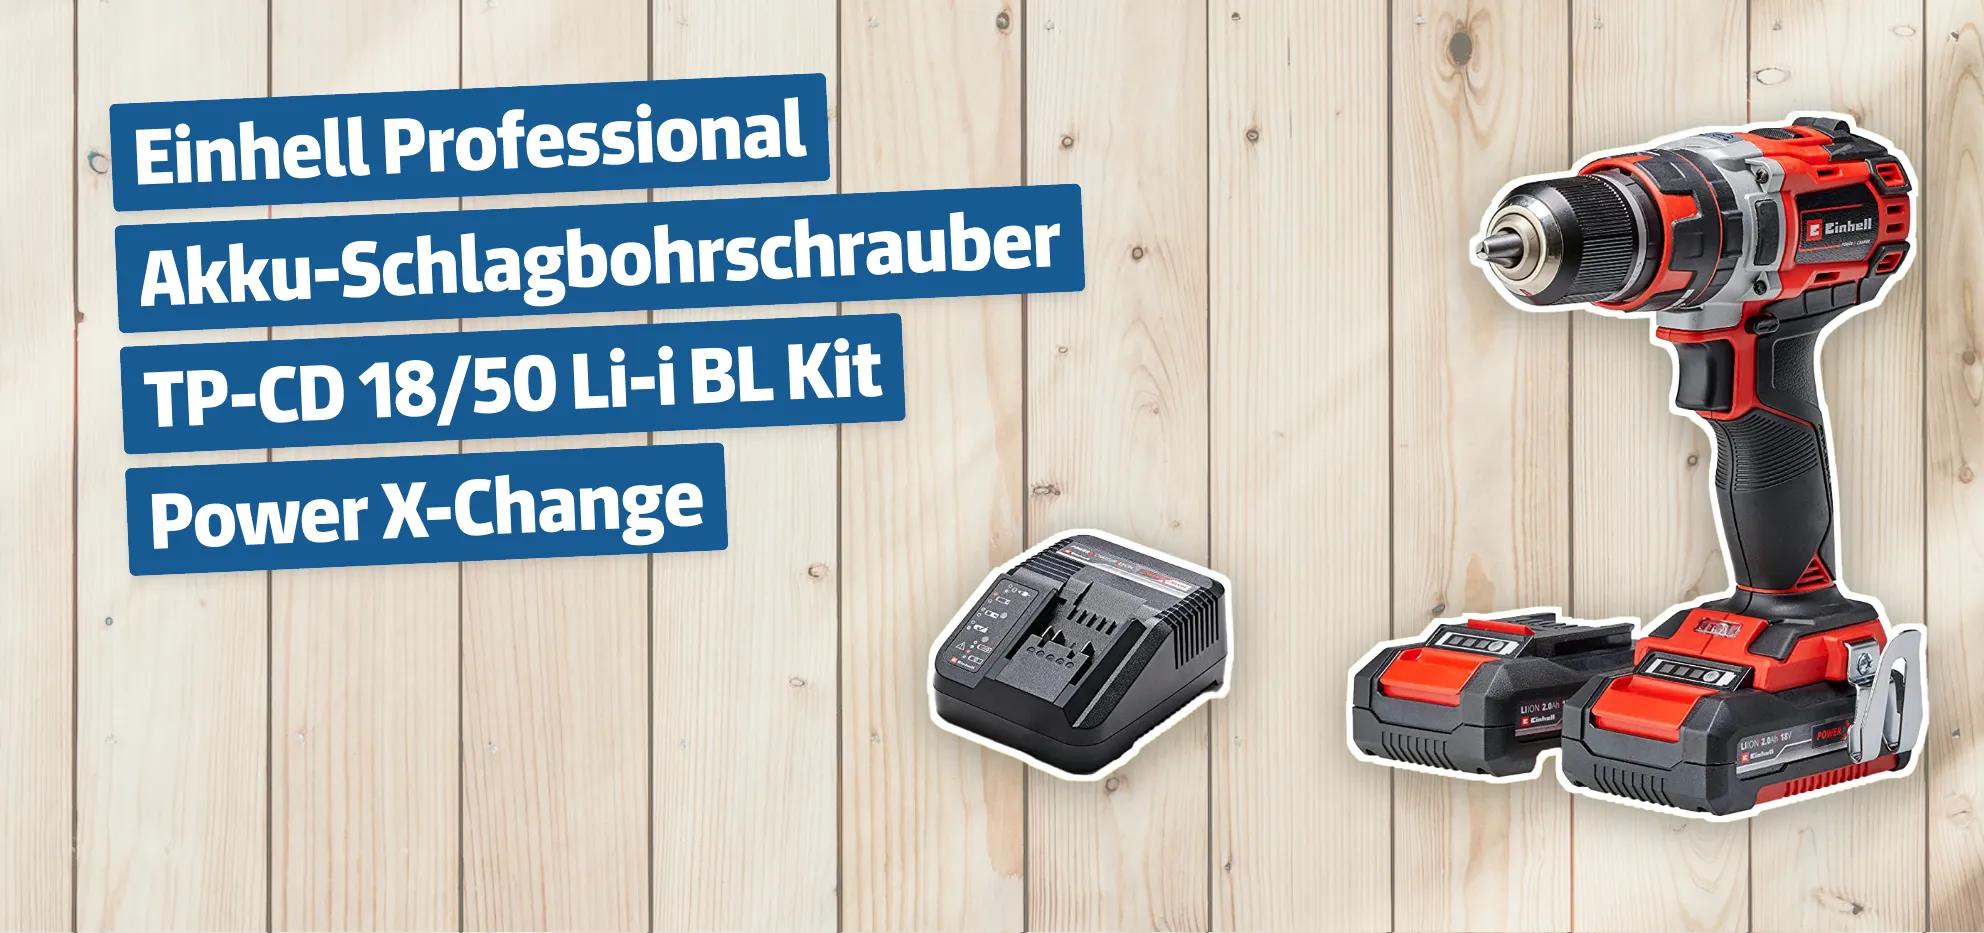 Einhell Professional Akku-Schlagbohrschrauber TP-CD 18/50 Li-i BL Kit Power X-Change